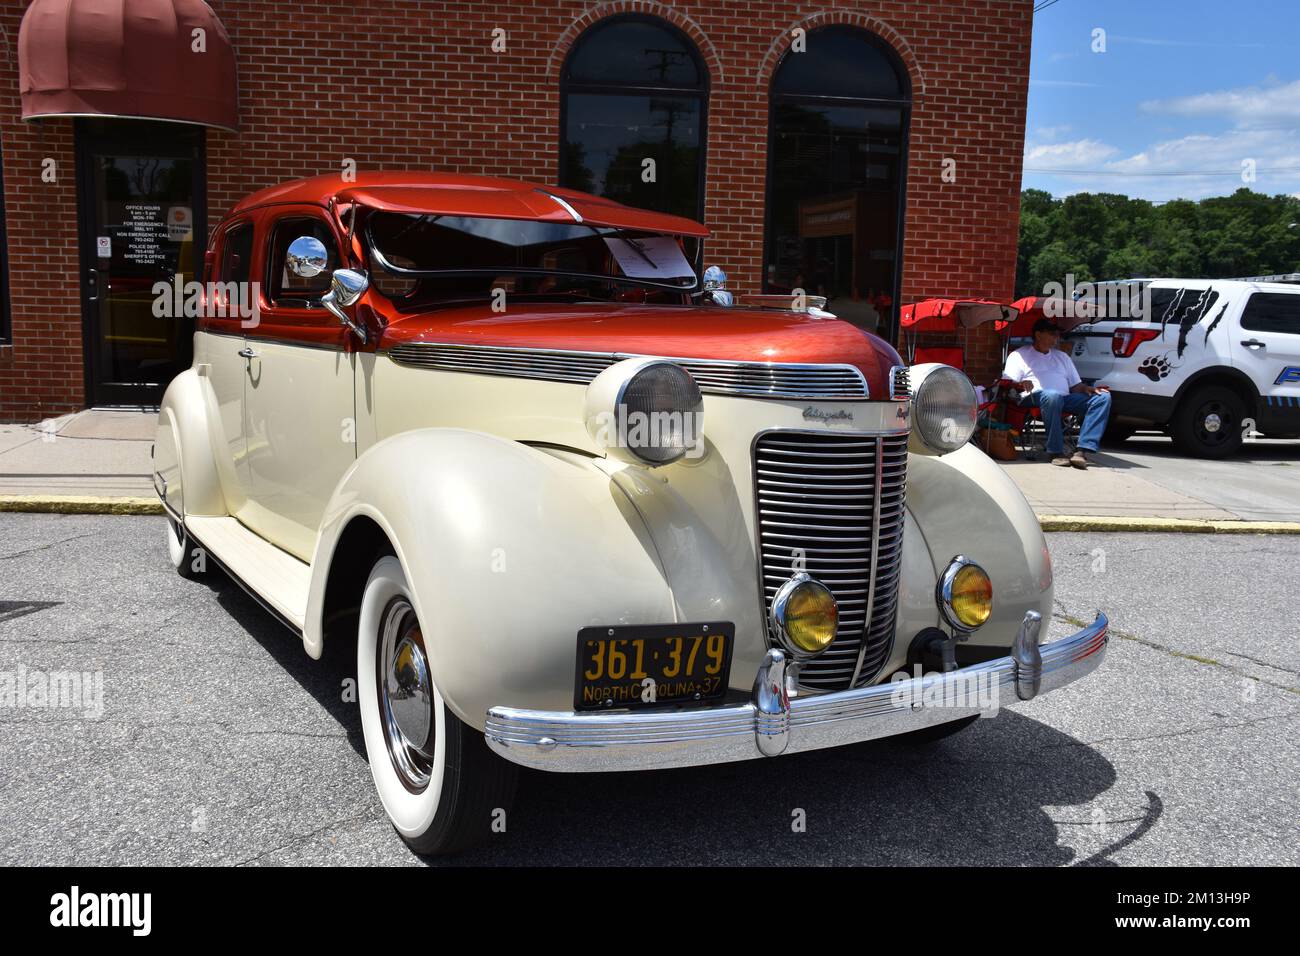 A 1937 Chrysler Royal on display at a Car Show. Stock Photo